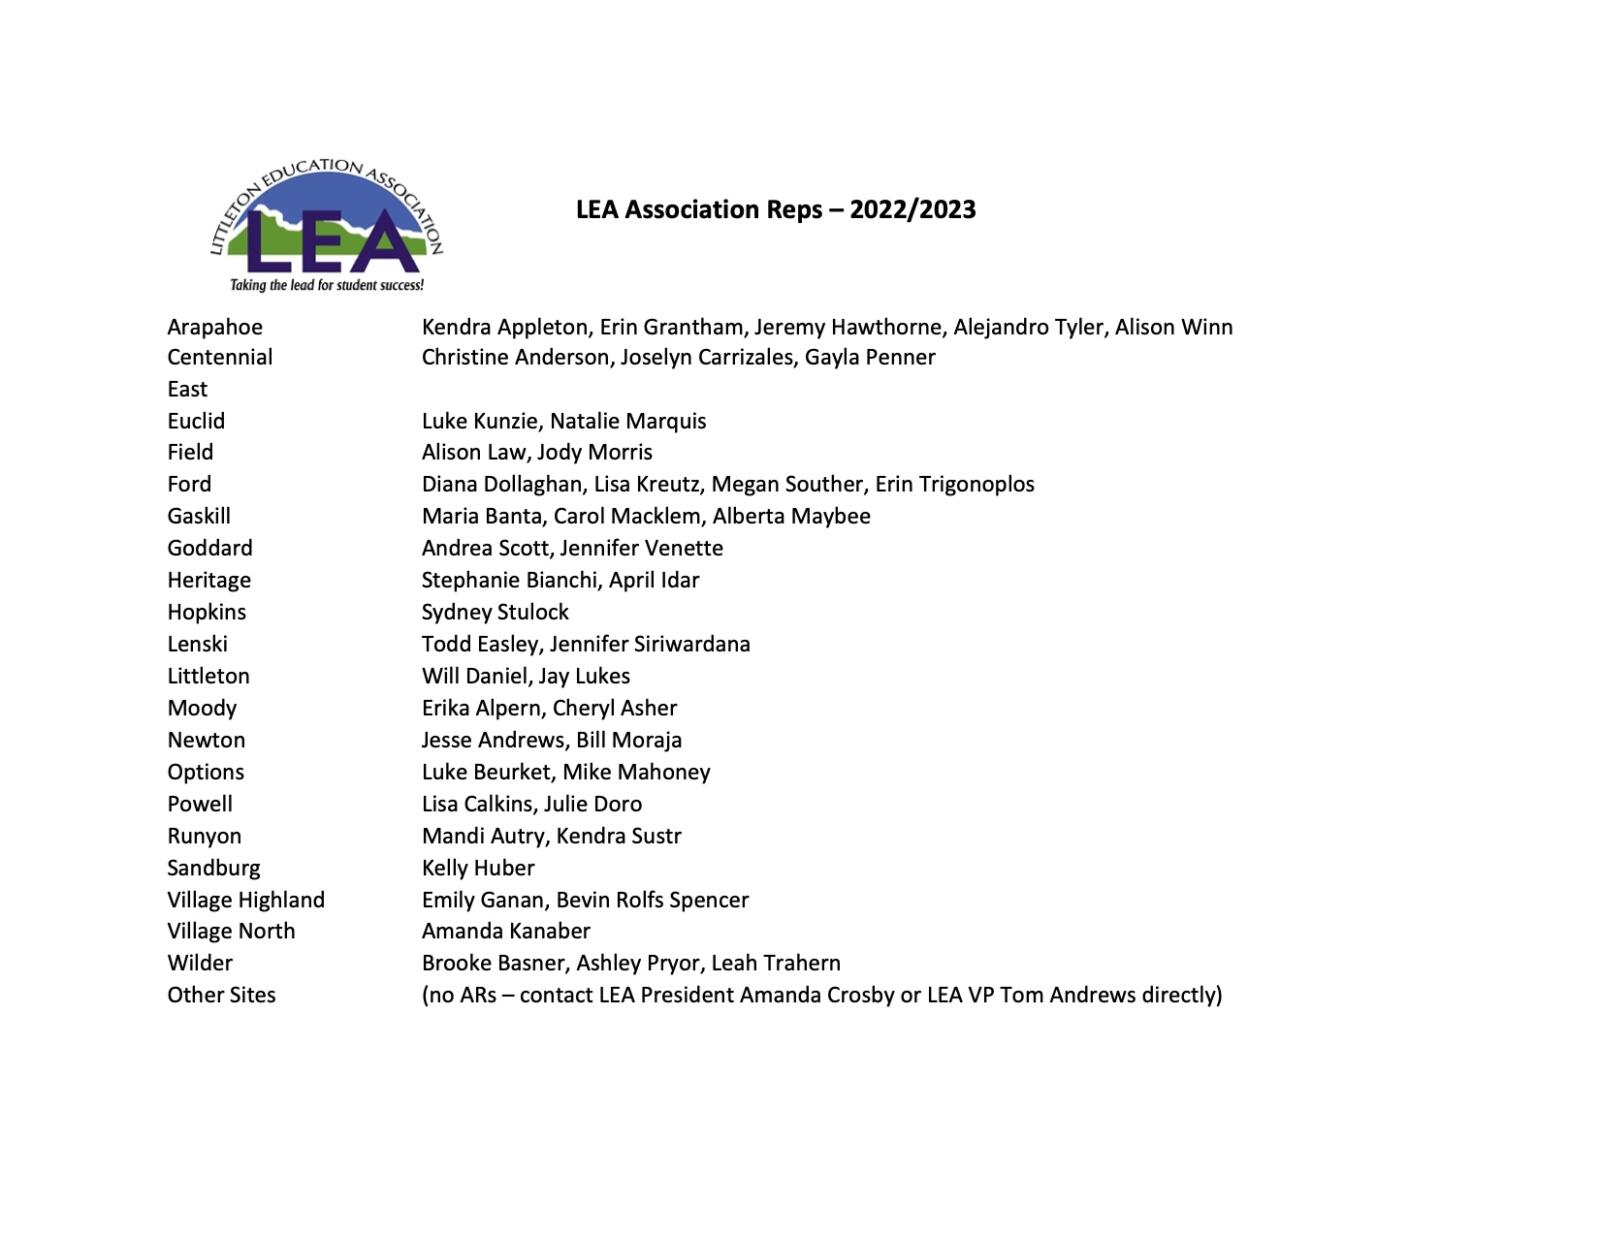 LEA association reps (AR) list September 2022